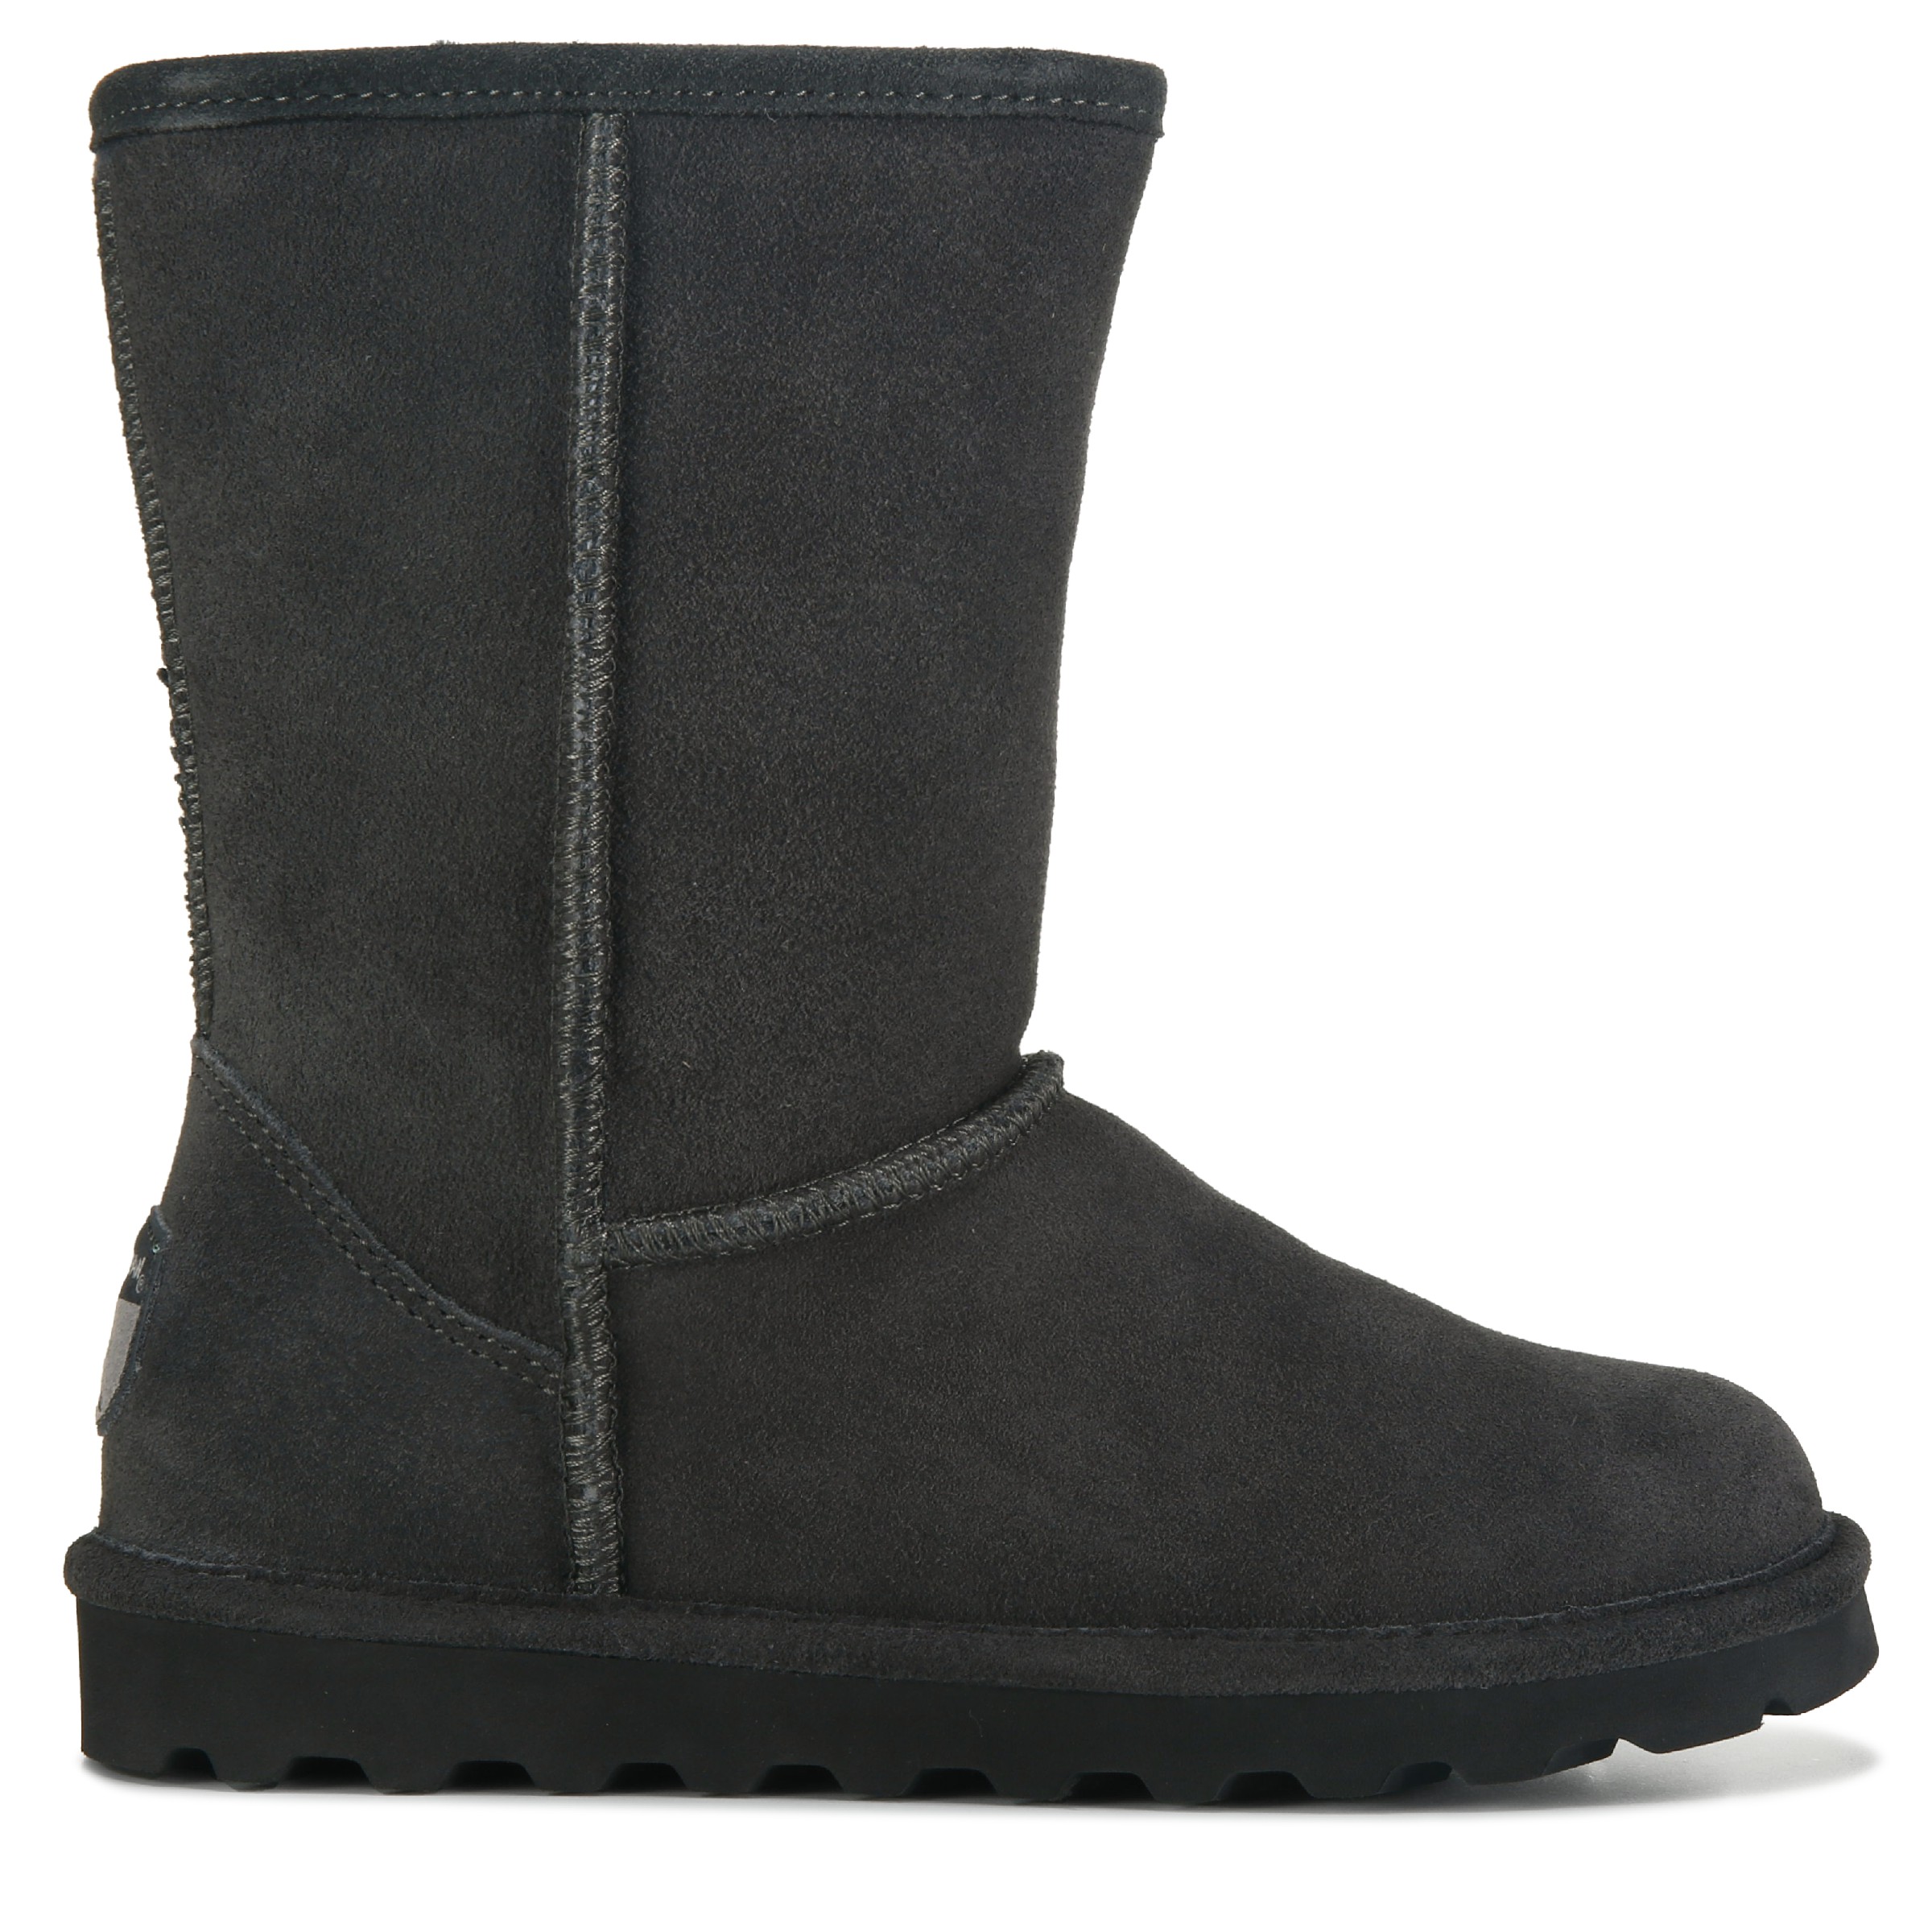 Bearpaw Women's Short Resistant Winter Boot Famous